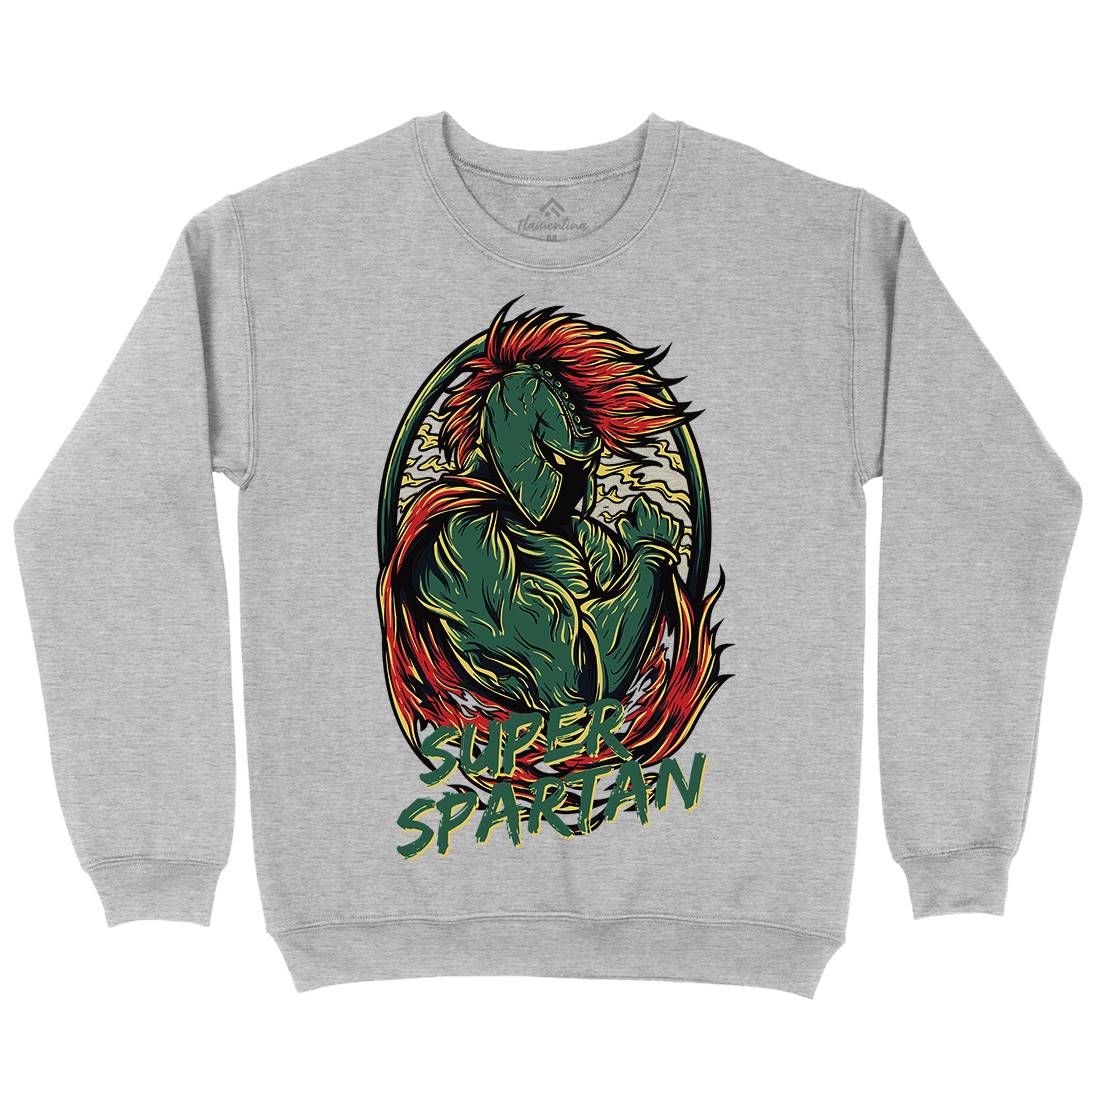 Super Spartan Mens Crew Neck Sweatshirt Warriors D843